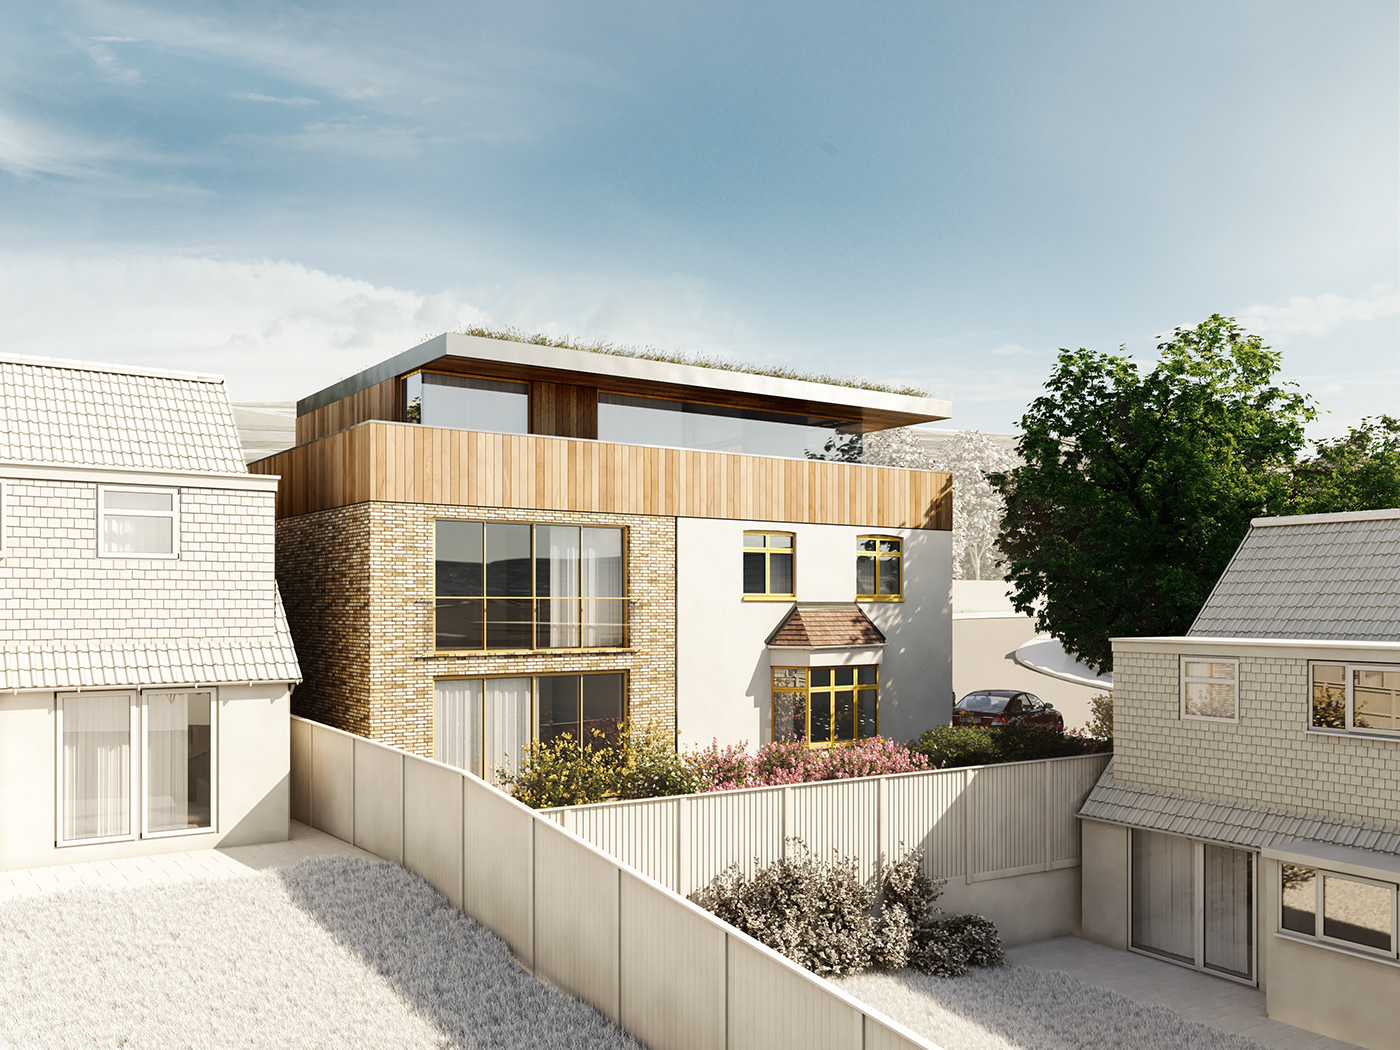 archviz building housing CGI Render architecture clayrender 3D planning viuslaization